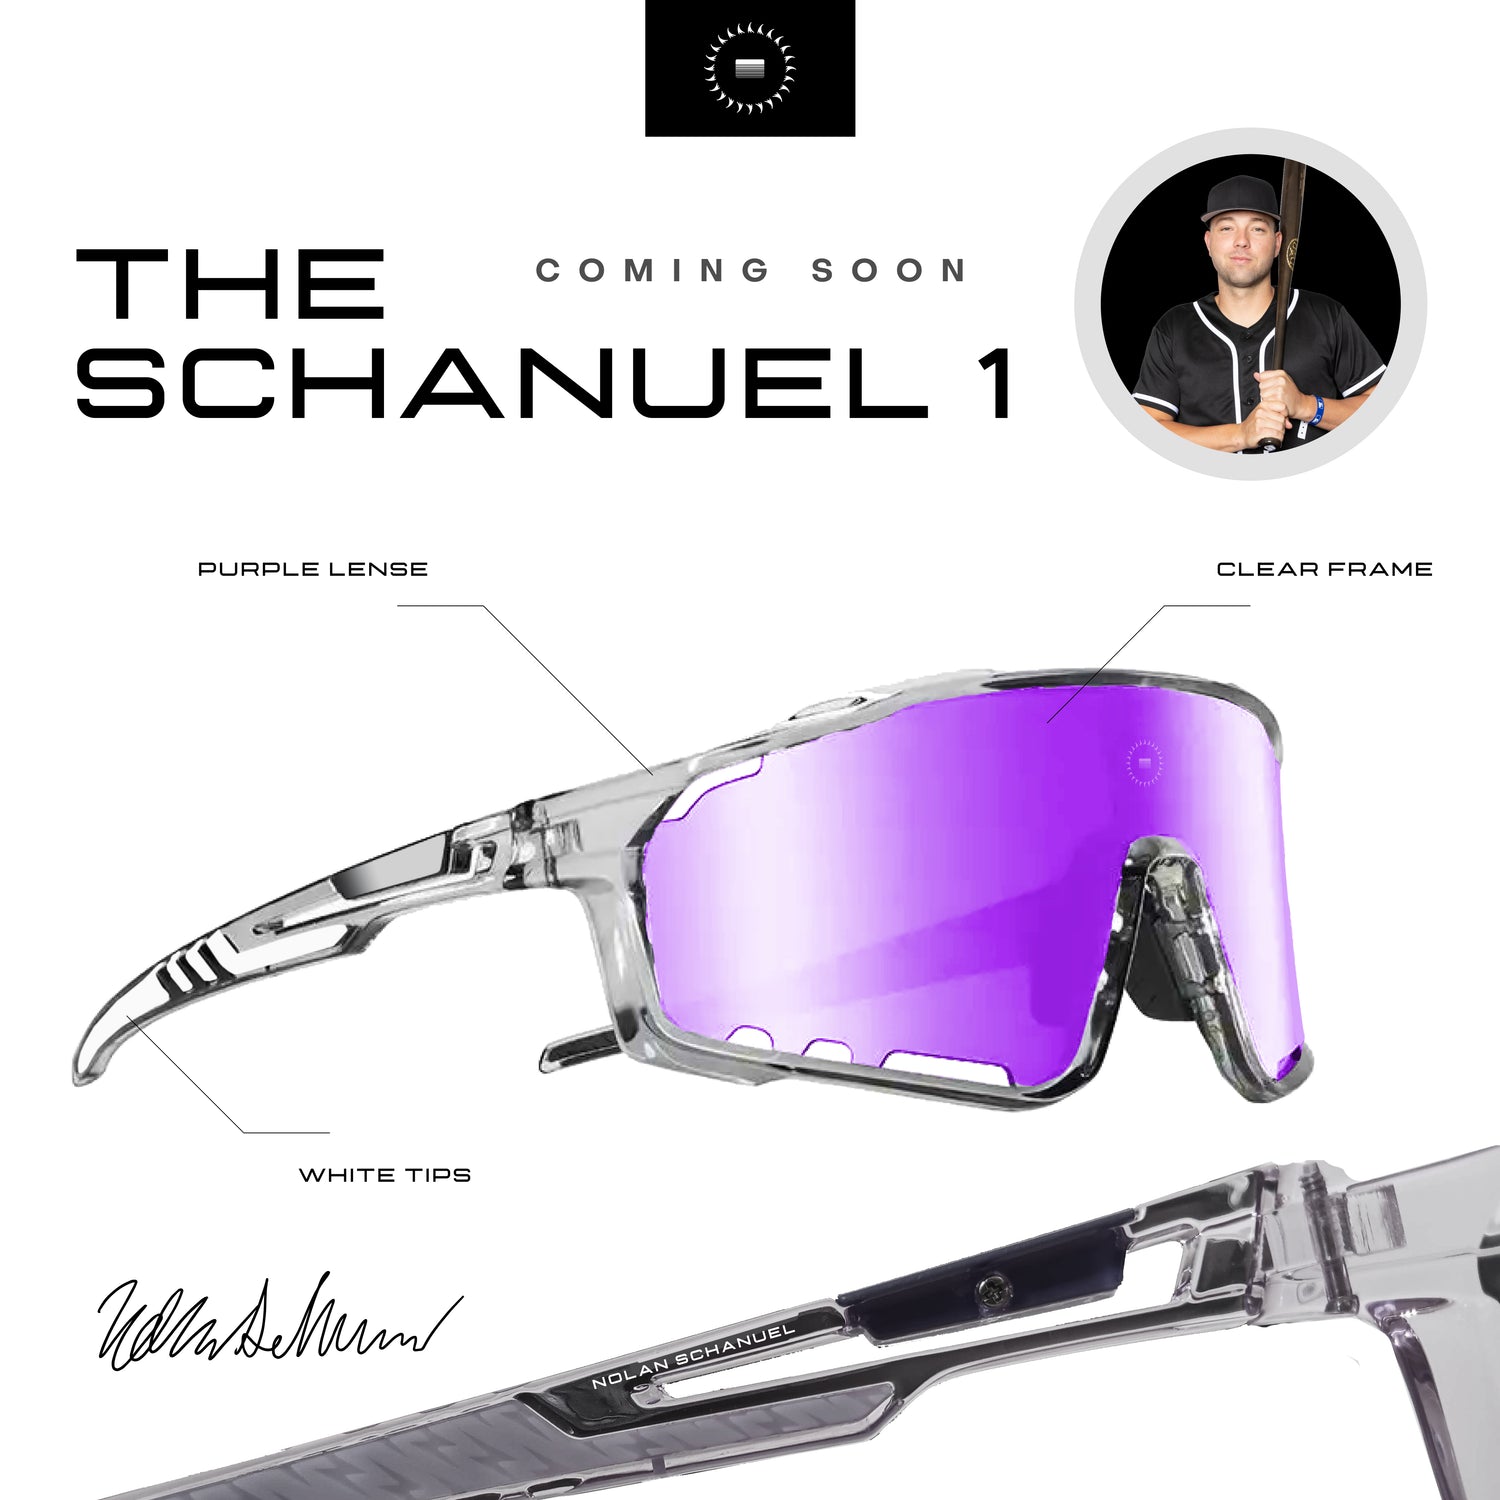 The "Schanuel 1" unveiled as Nolan Schanuel's Signature Sunglasses as Schanuel gets called up to Angels